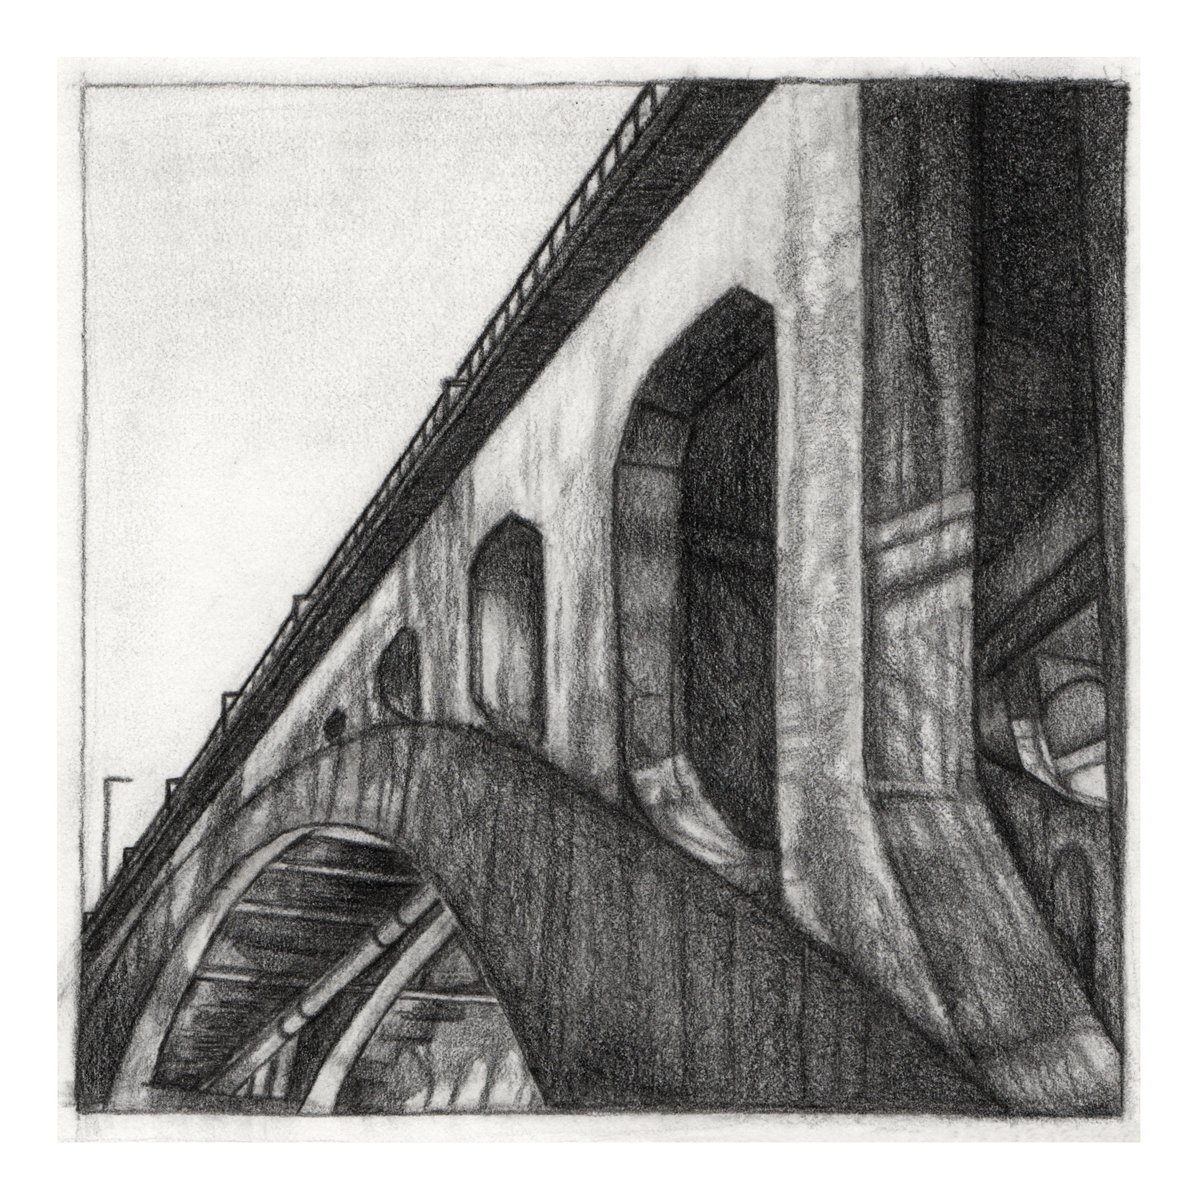 Berw (White) Bridge, Pontypridd
Pencil on paper
(2020)

#listedbuilding #drawing #artonpaper #art #artwork #heritage #concrete #bridge #pontypridd #southwales